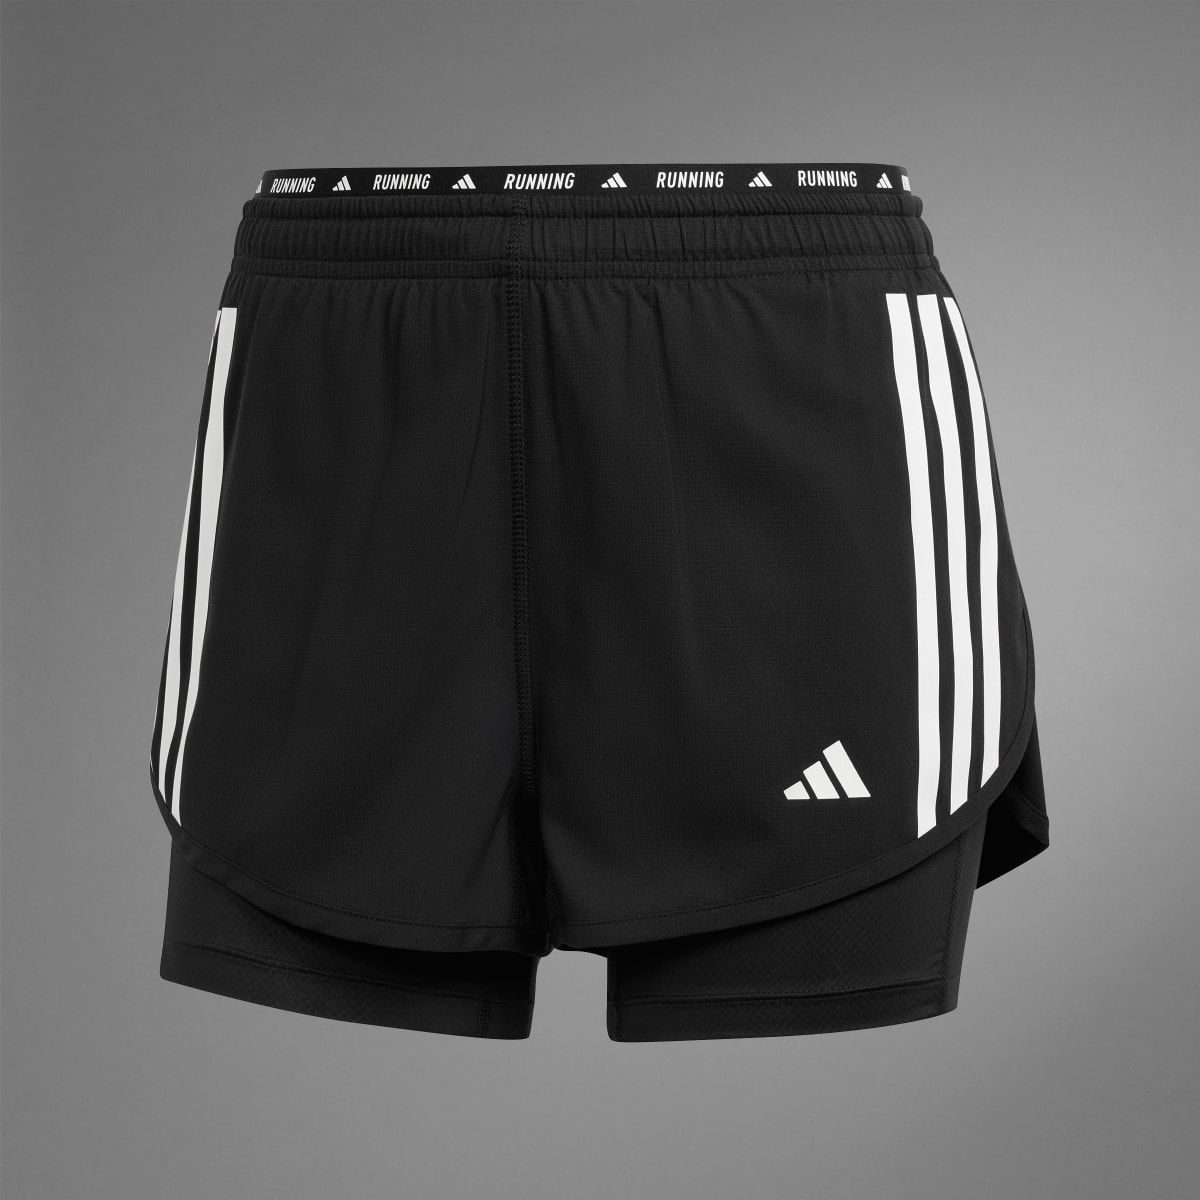 Adidas Own the Run 3-Stripes 2-in-1 Shorts. 11